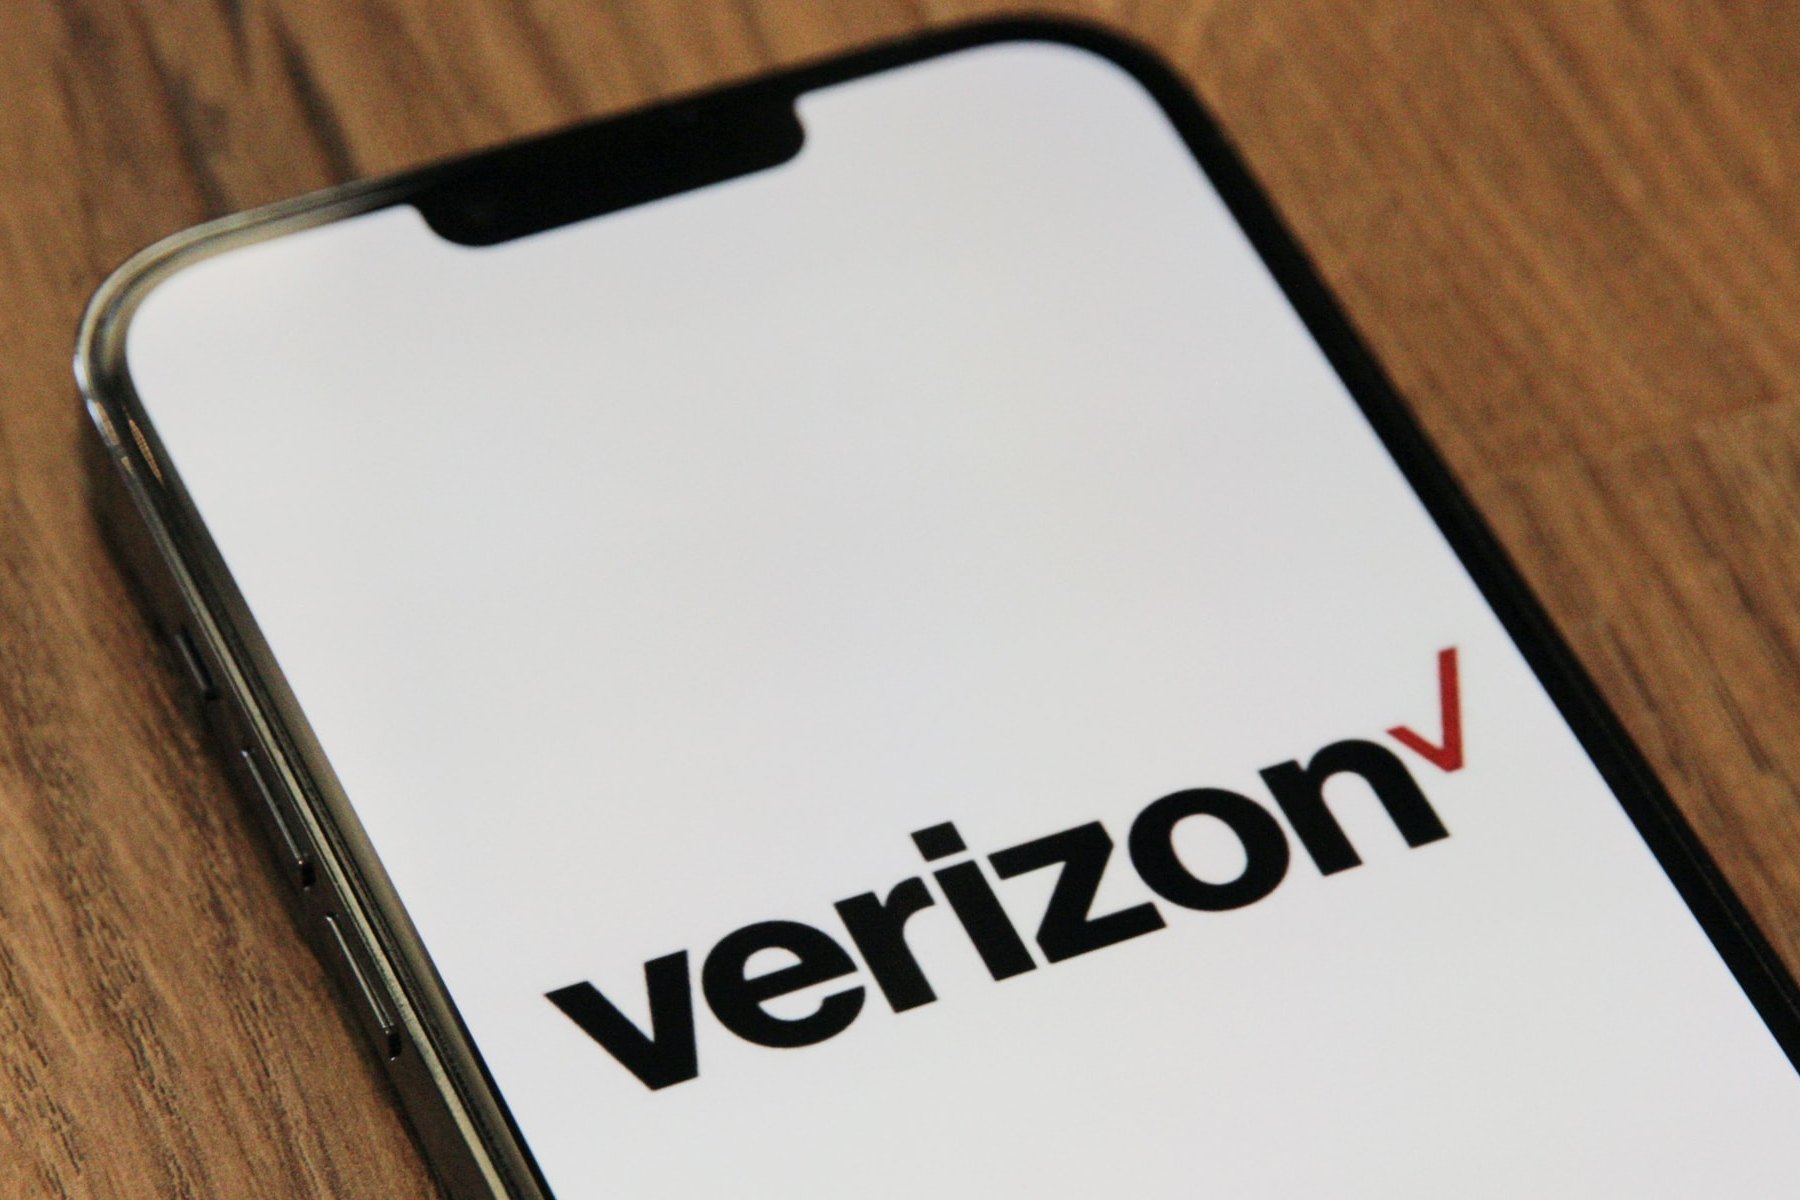 Verizon banner splashed across iPhone screen